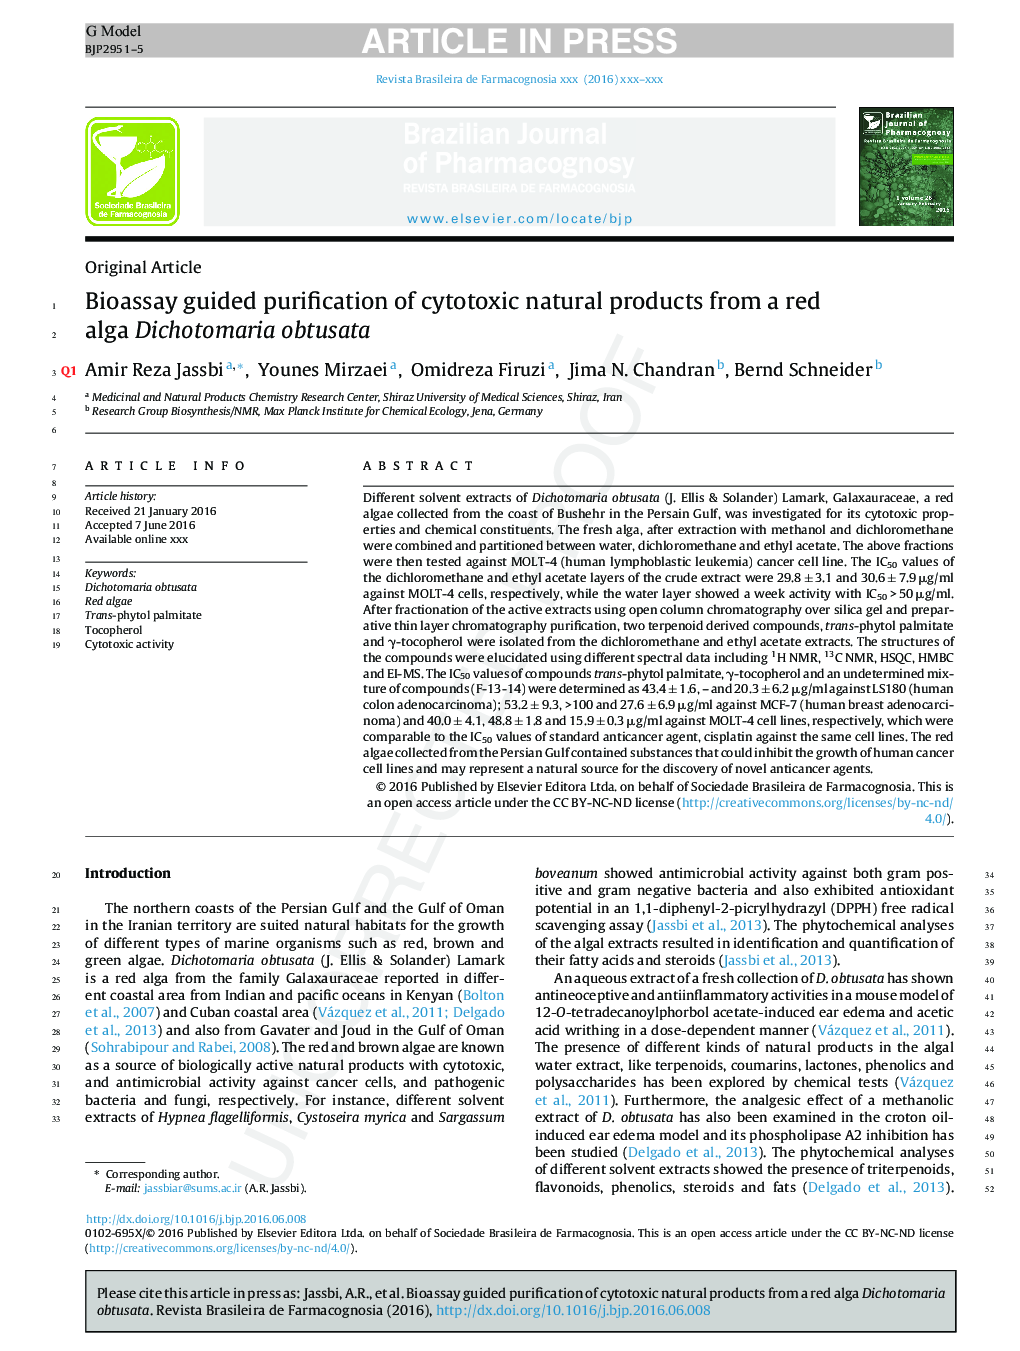 Bioassay guided purification of cytotoxic natural products from a red alga Dichotomaria obtusata